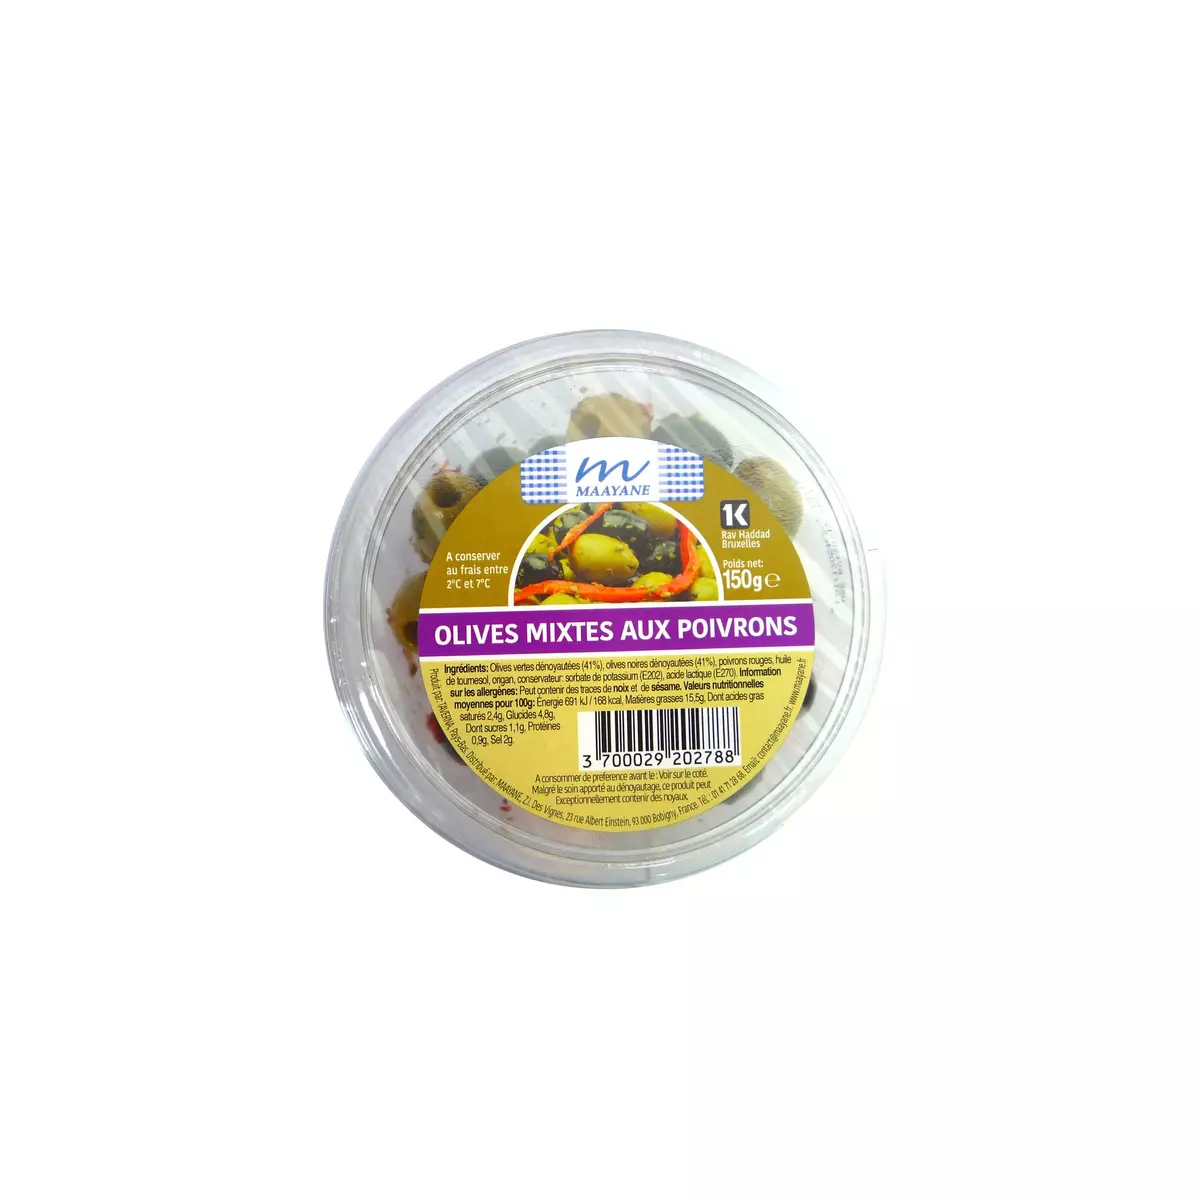 MAAYANE Olives mixtes aux poivrons casher 150g